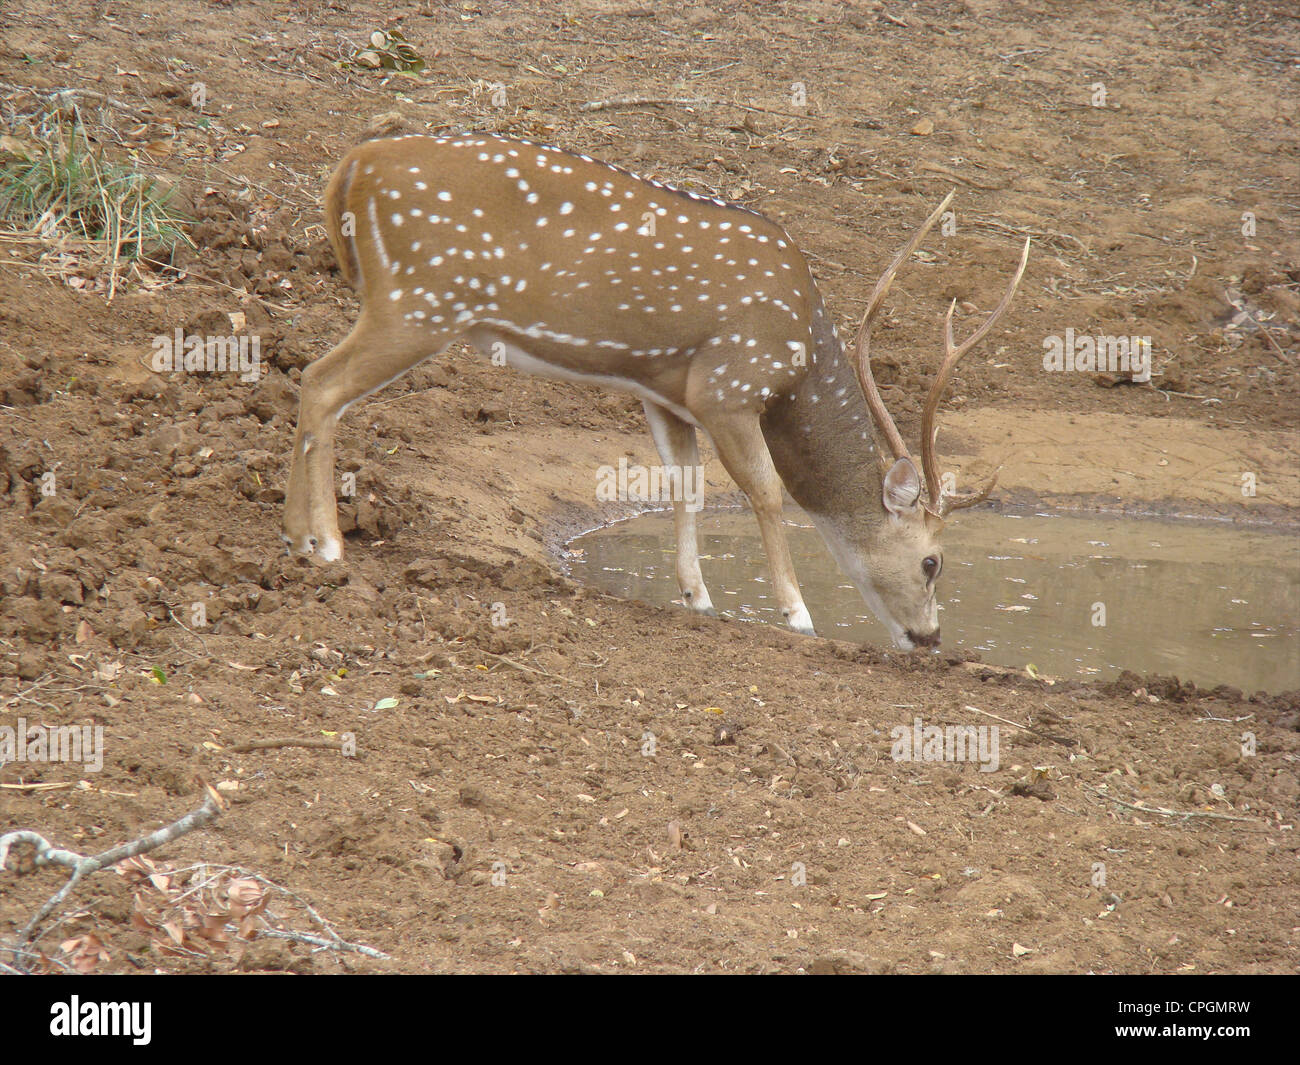 Male Spotted deer drinking from waterhole, Yala National Park, Sri Lanka, Asia Stock Photo